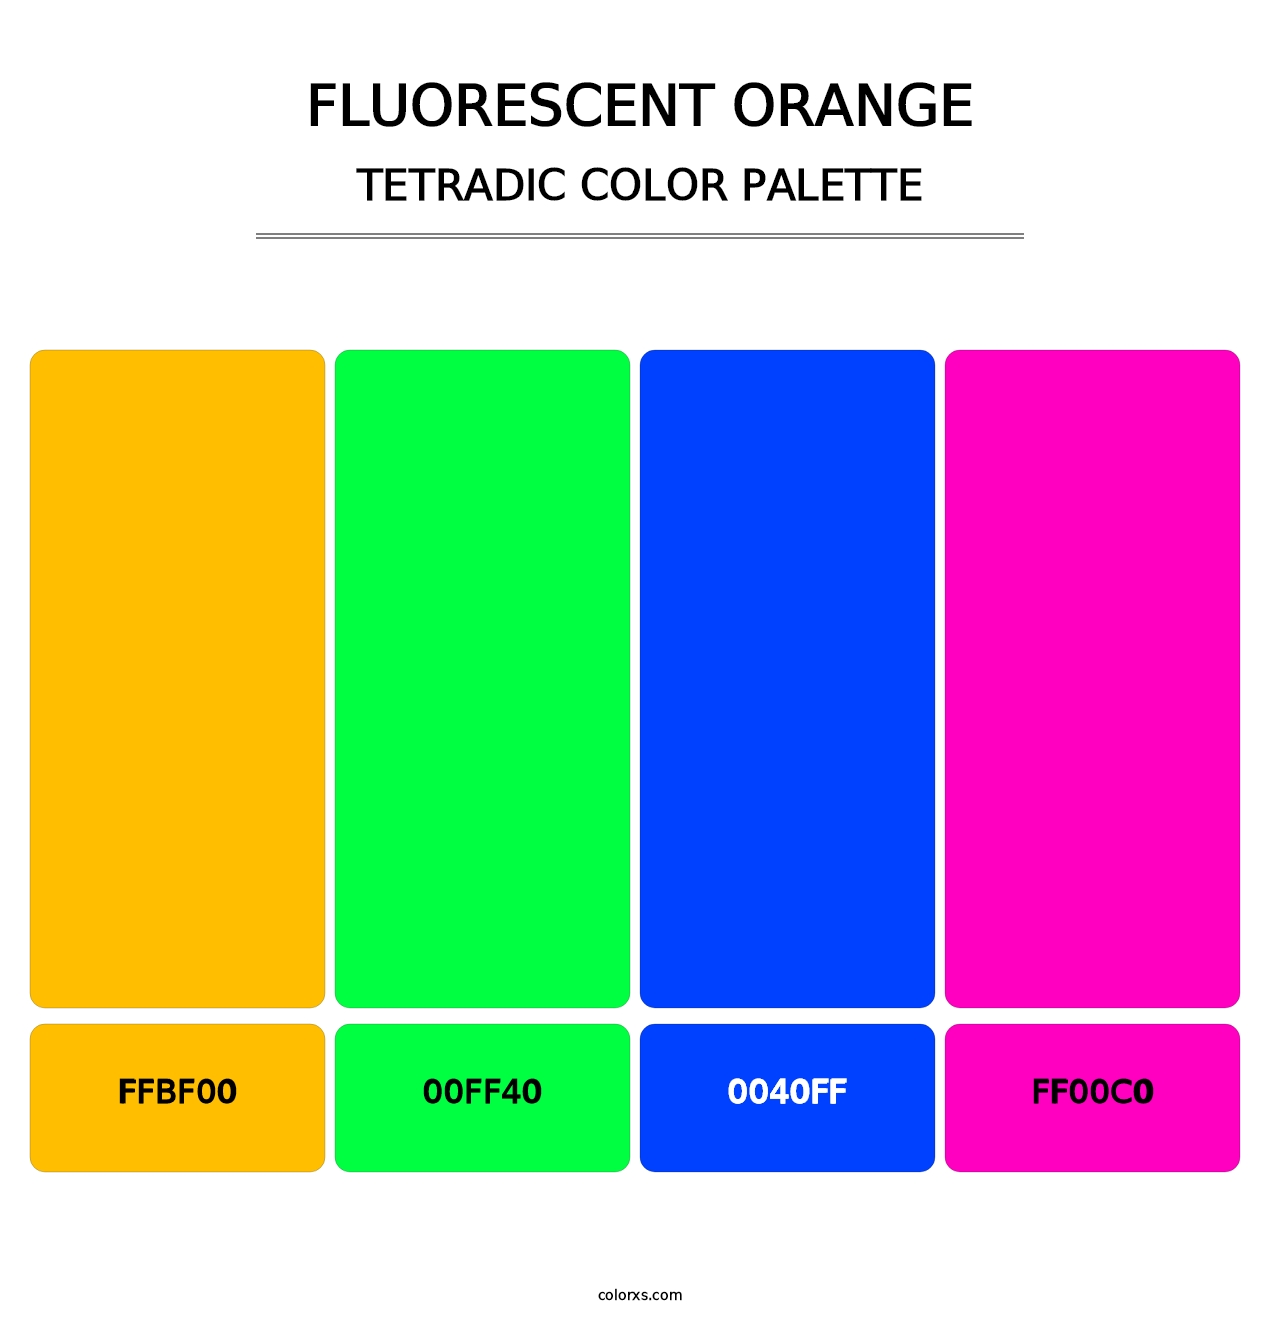 Fluorescent Orange - Tetradic Color Palette